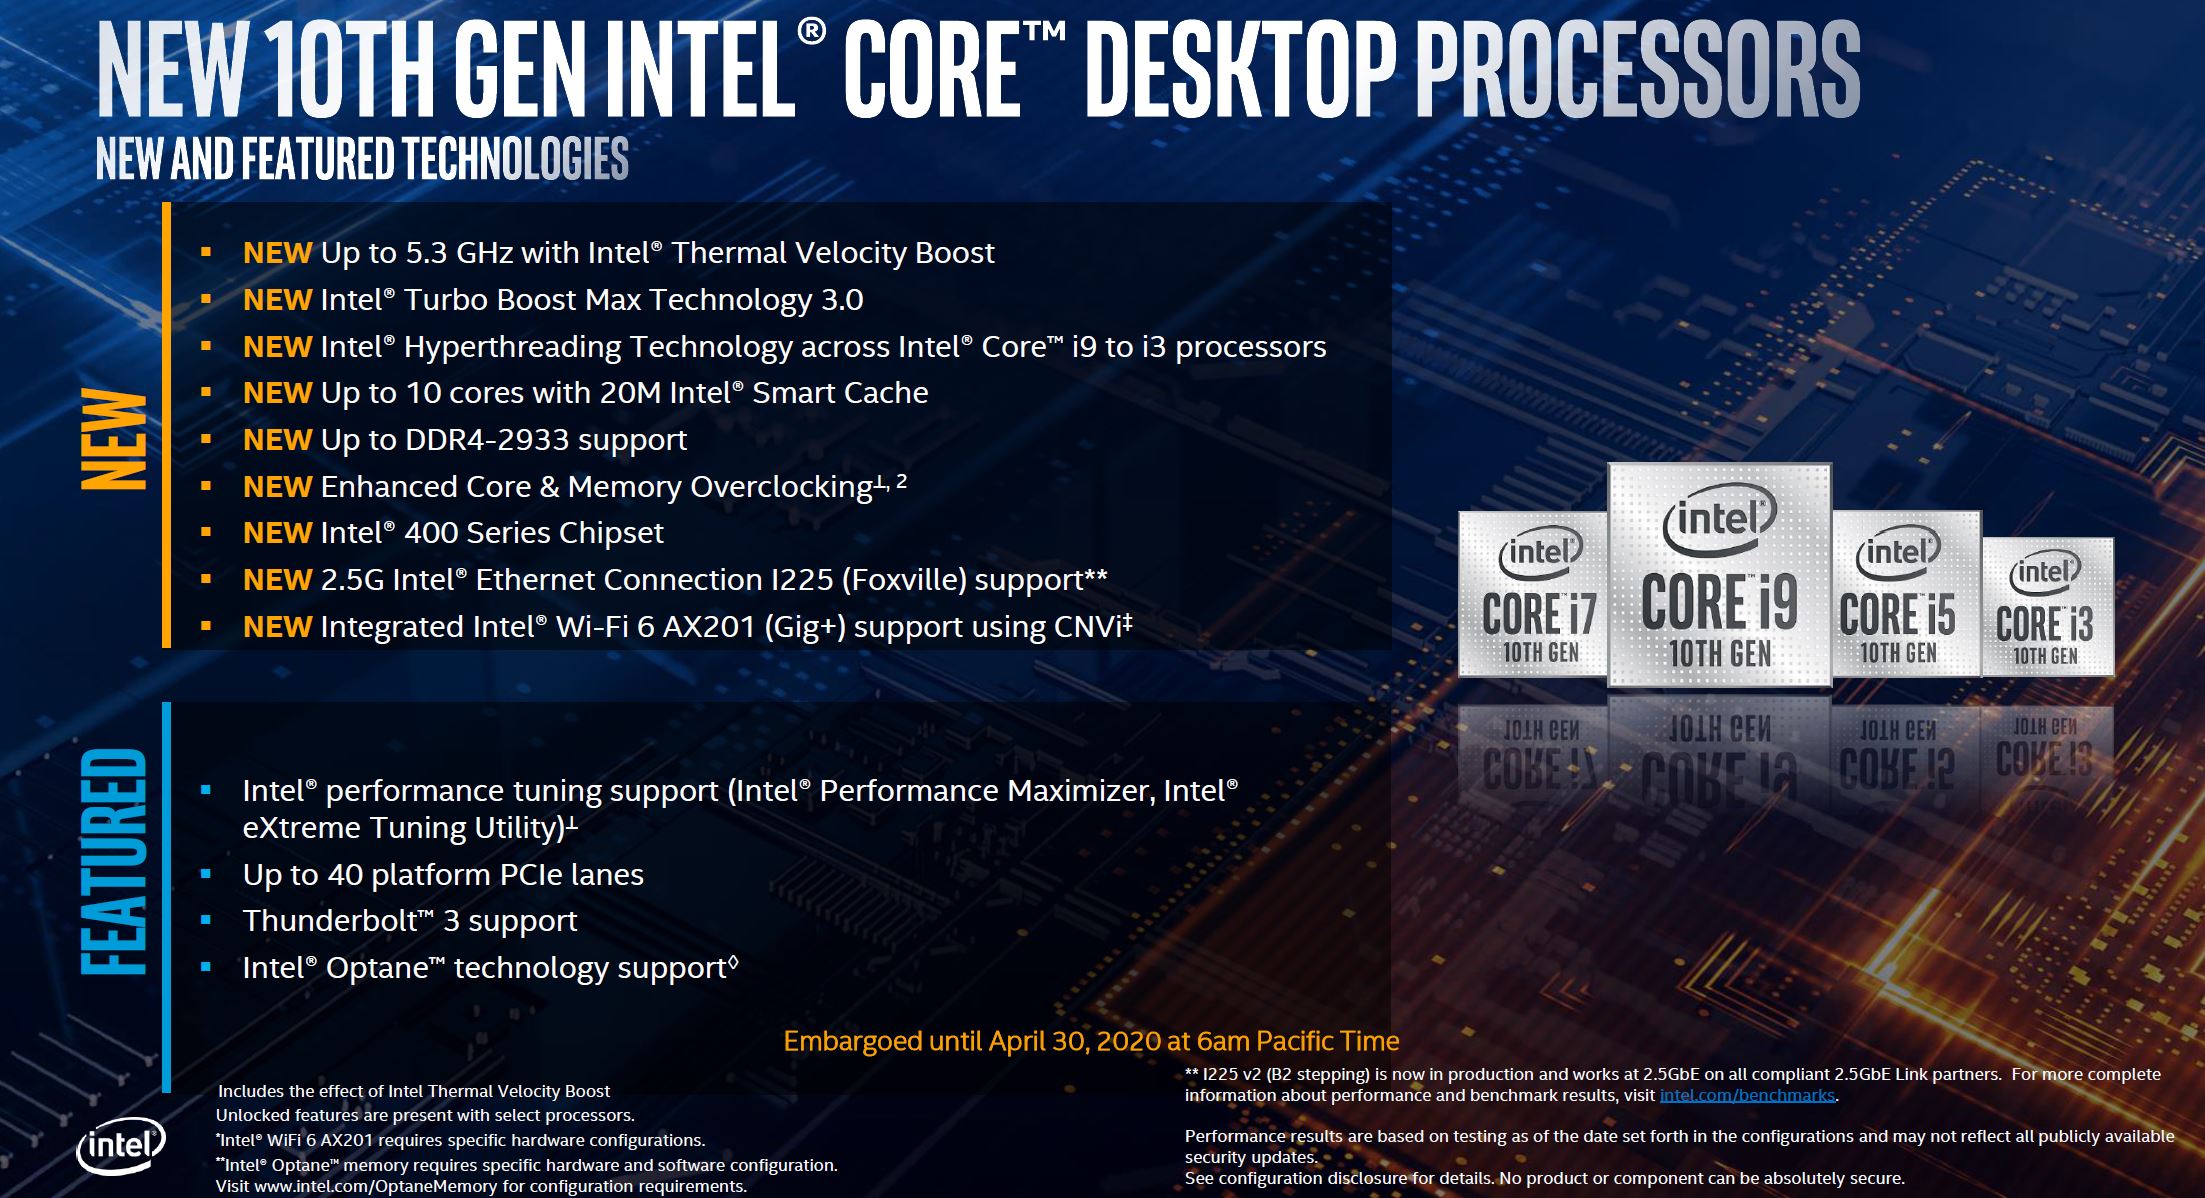 10th Gen Intel Core Desktop Features